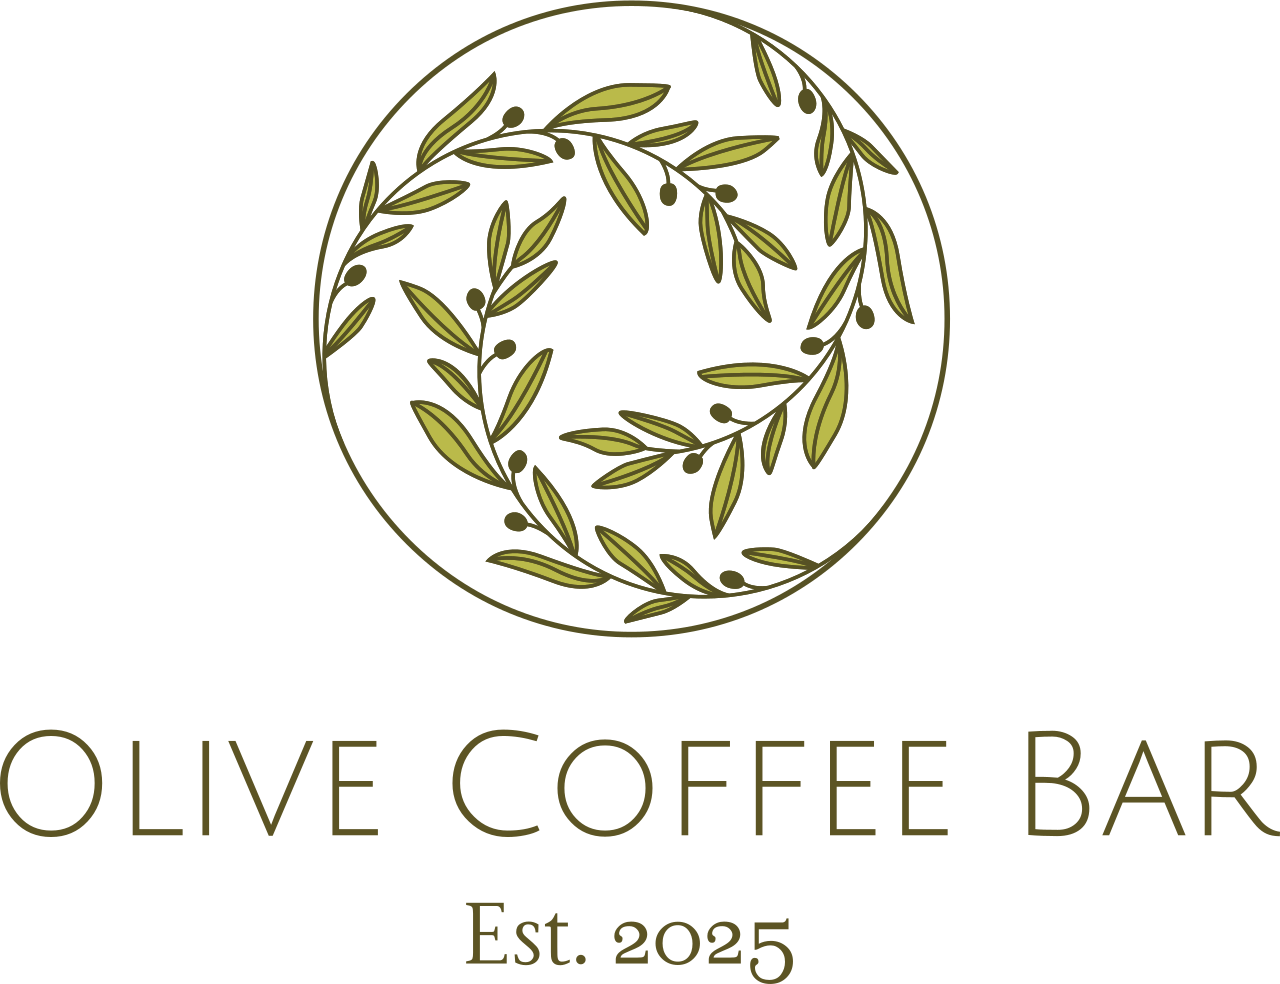 Olive Coffee Bar's logo